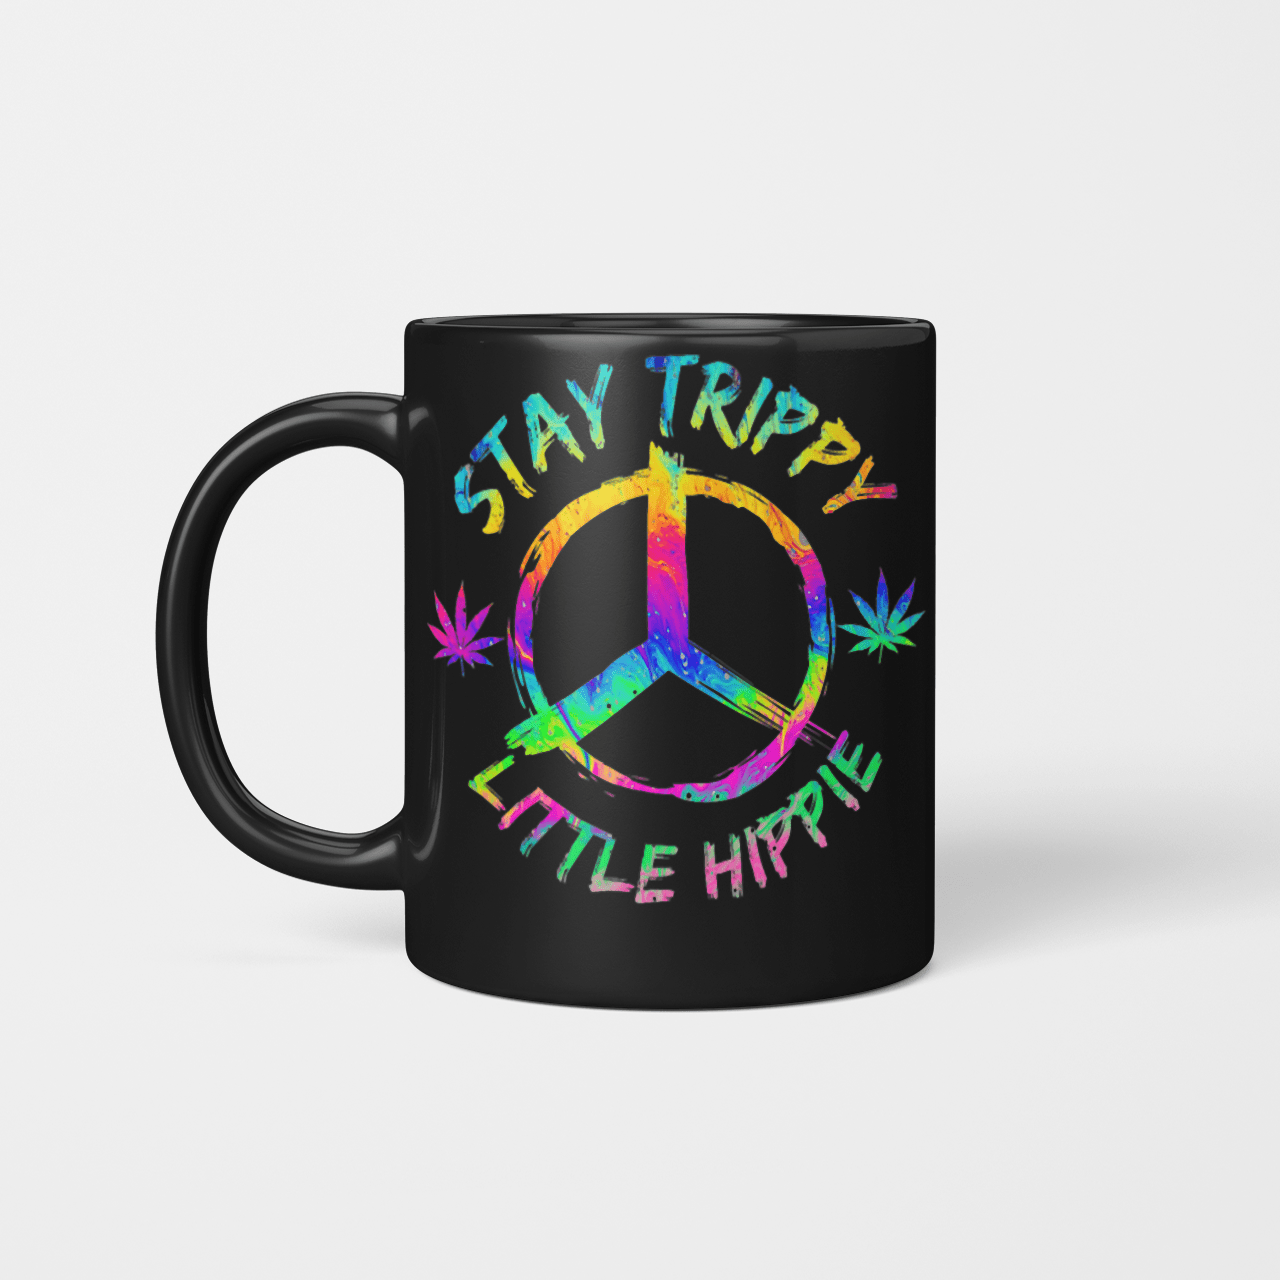 Stay-Trippy Little-Hippie Cab2324